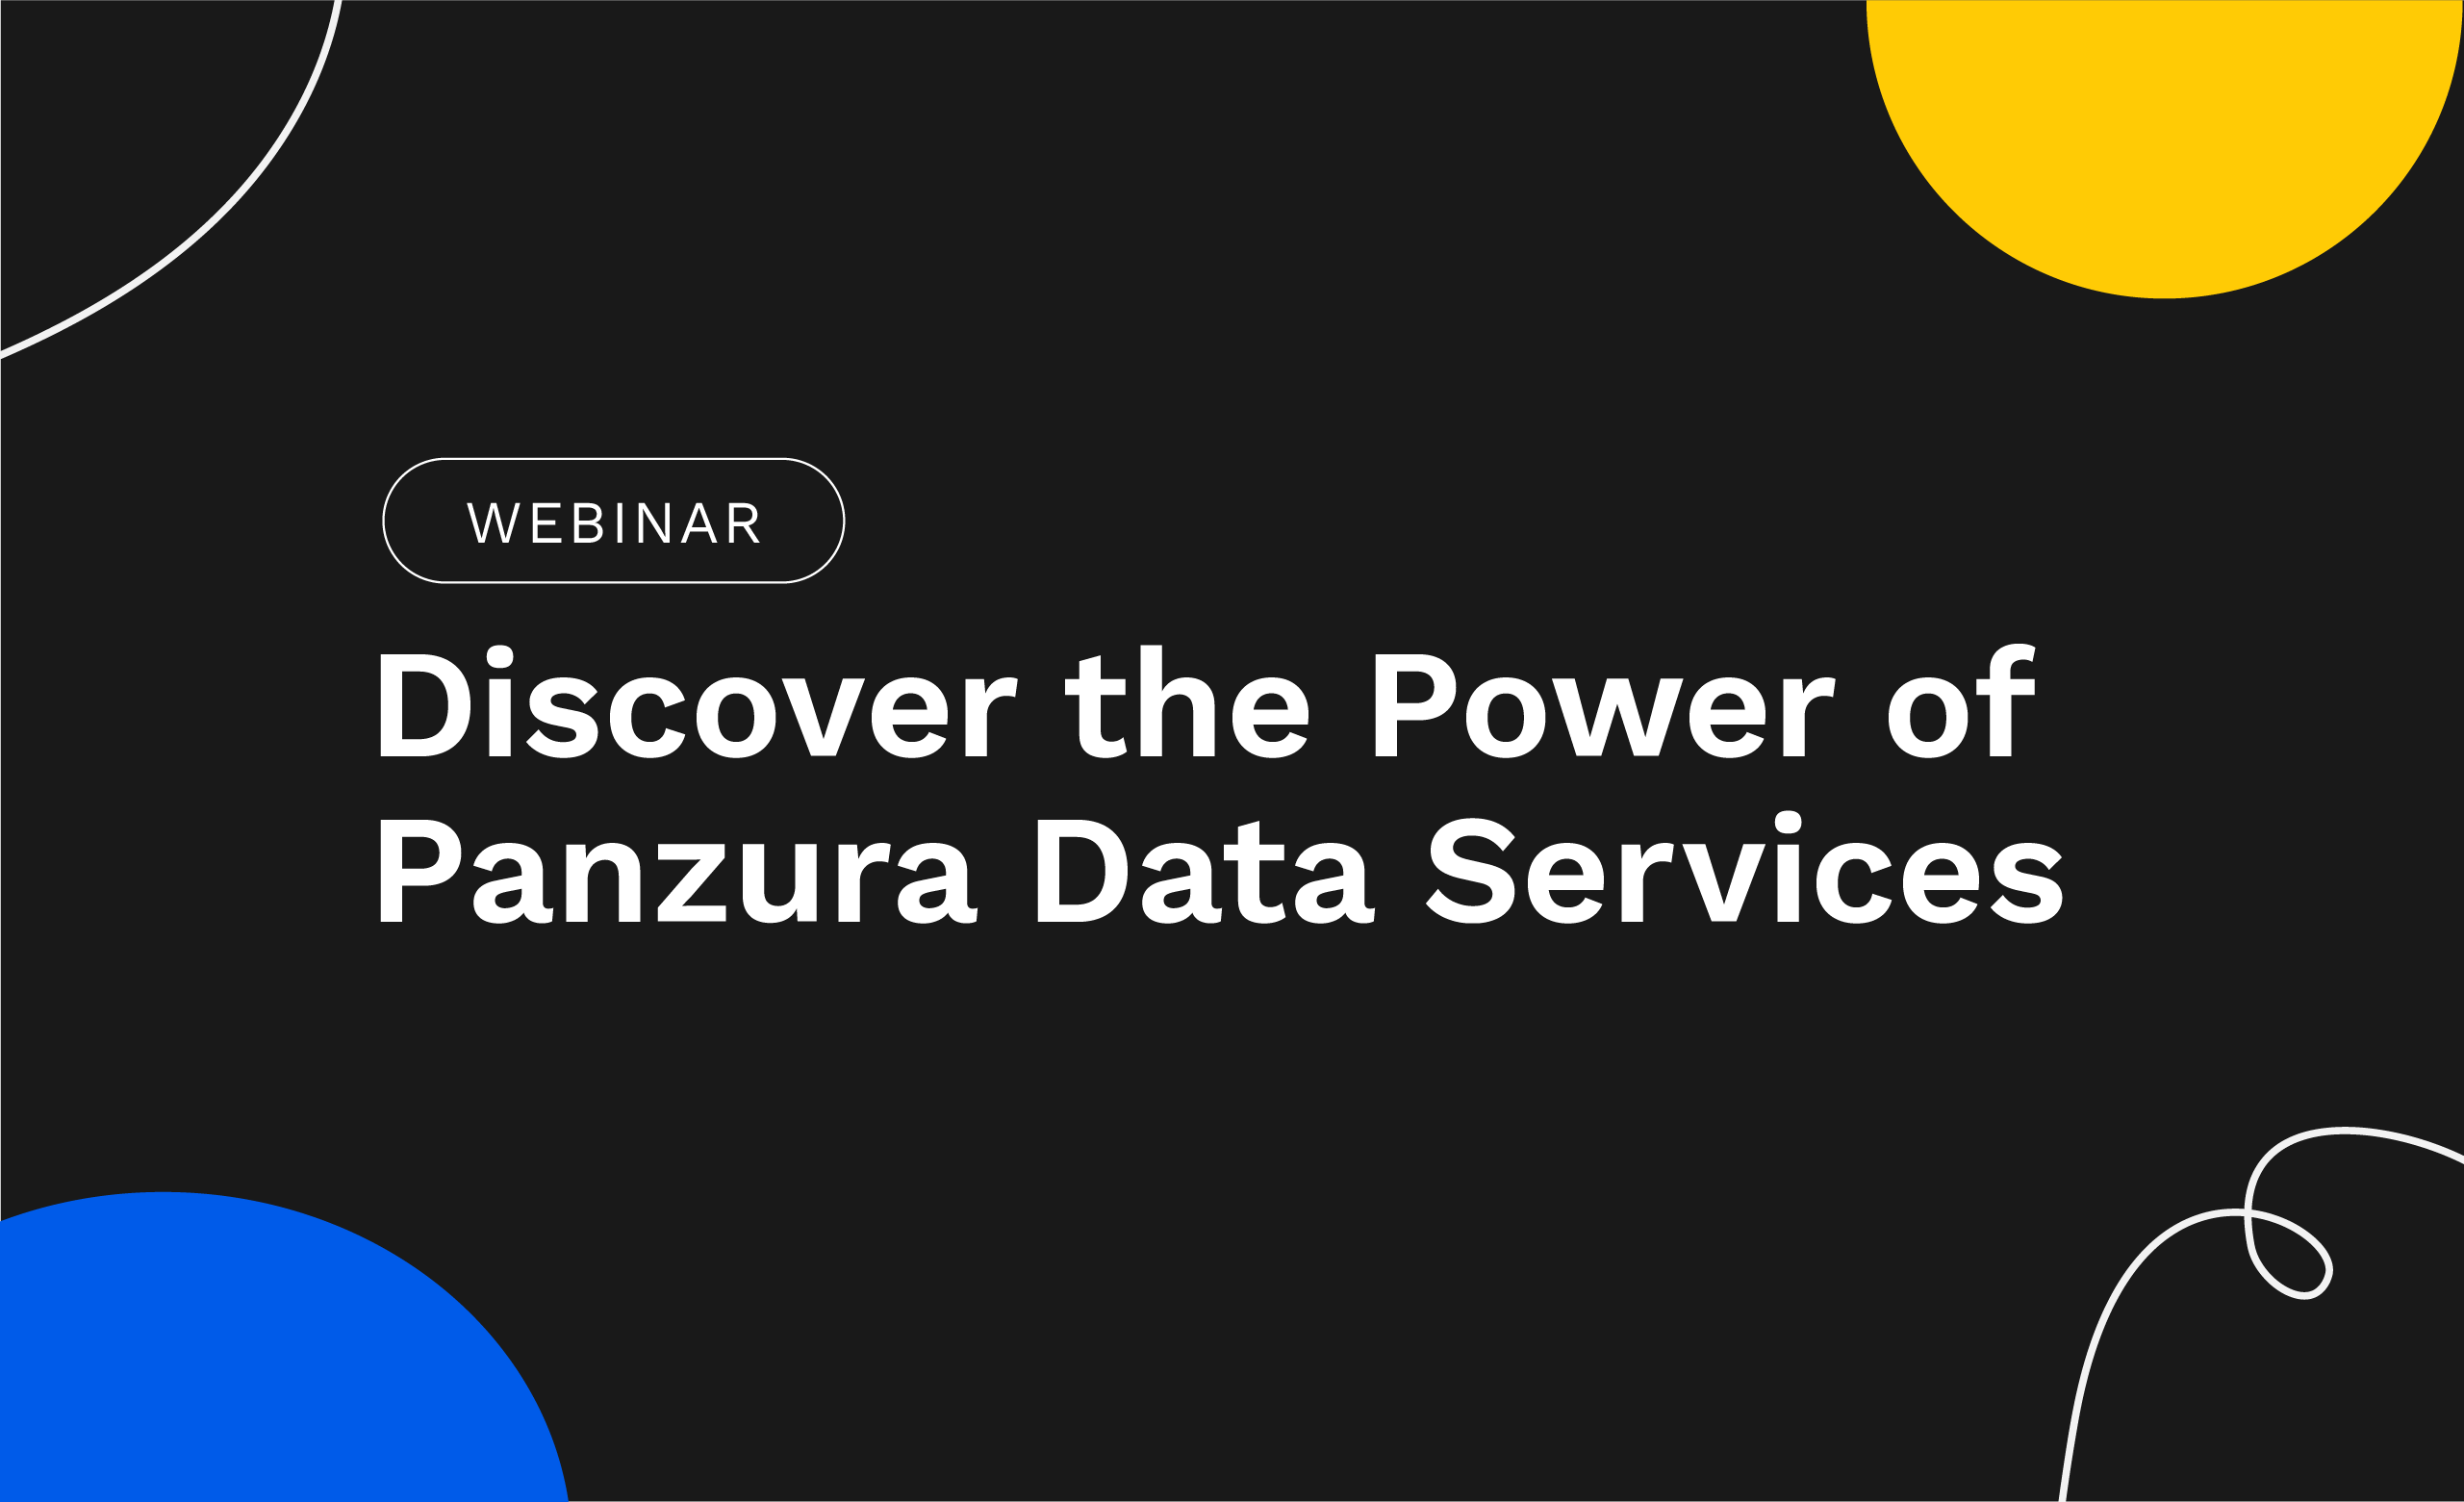 Webinar: Discover the Power of Panzura Data Services